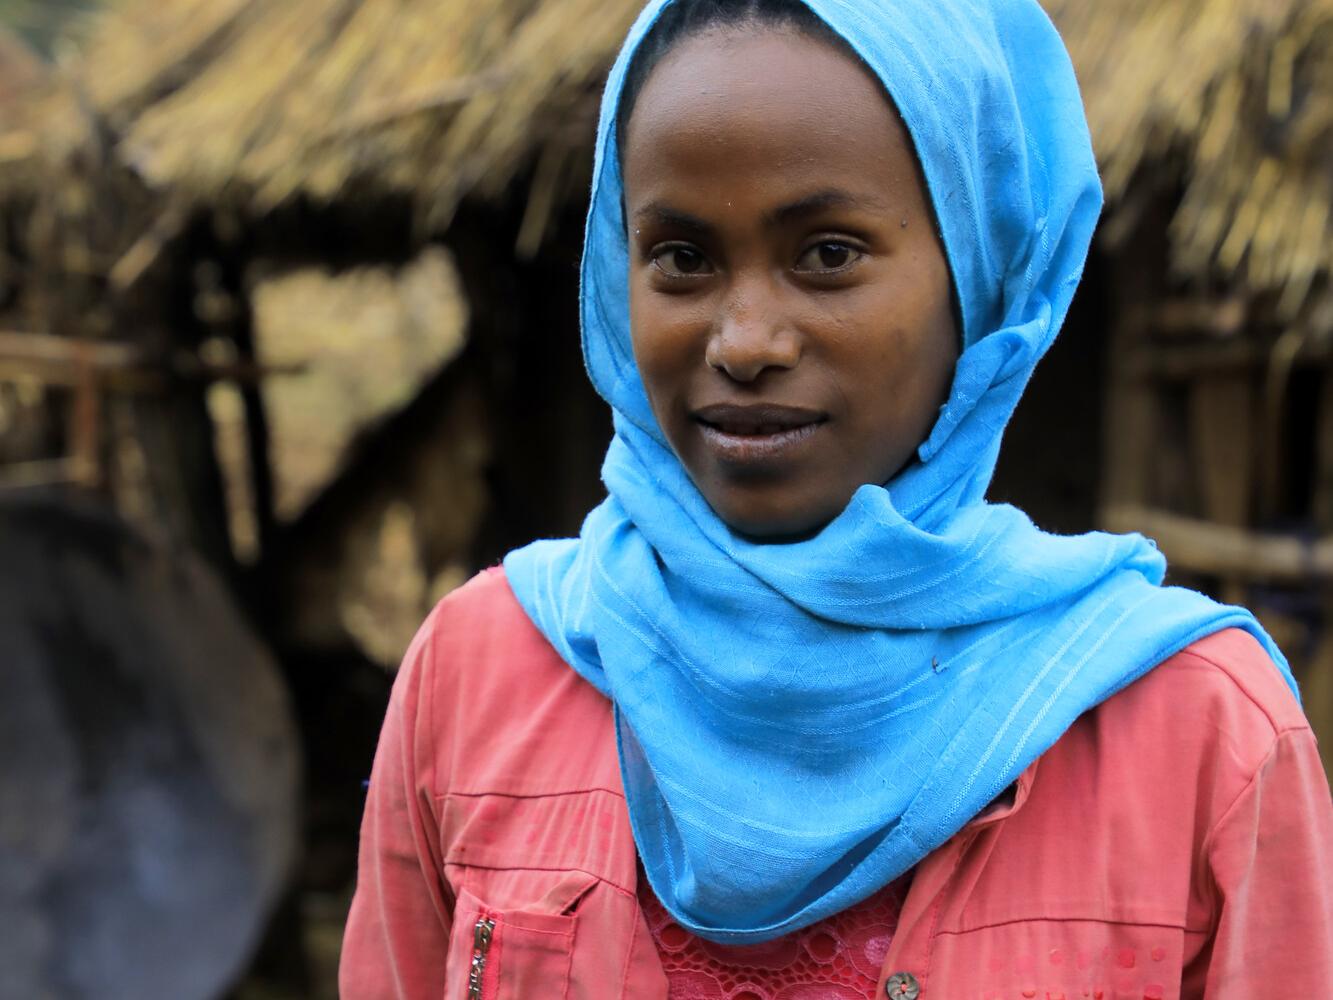 Debritu, 16, standing outside in a village in Ethiopia